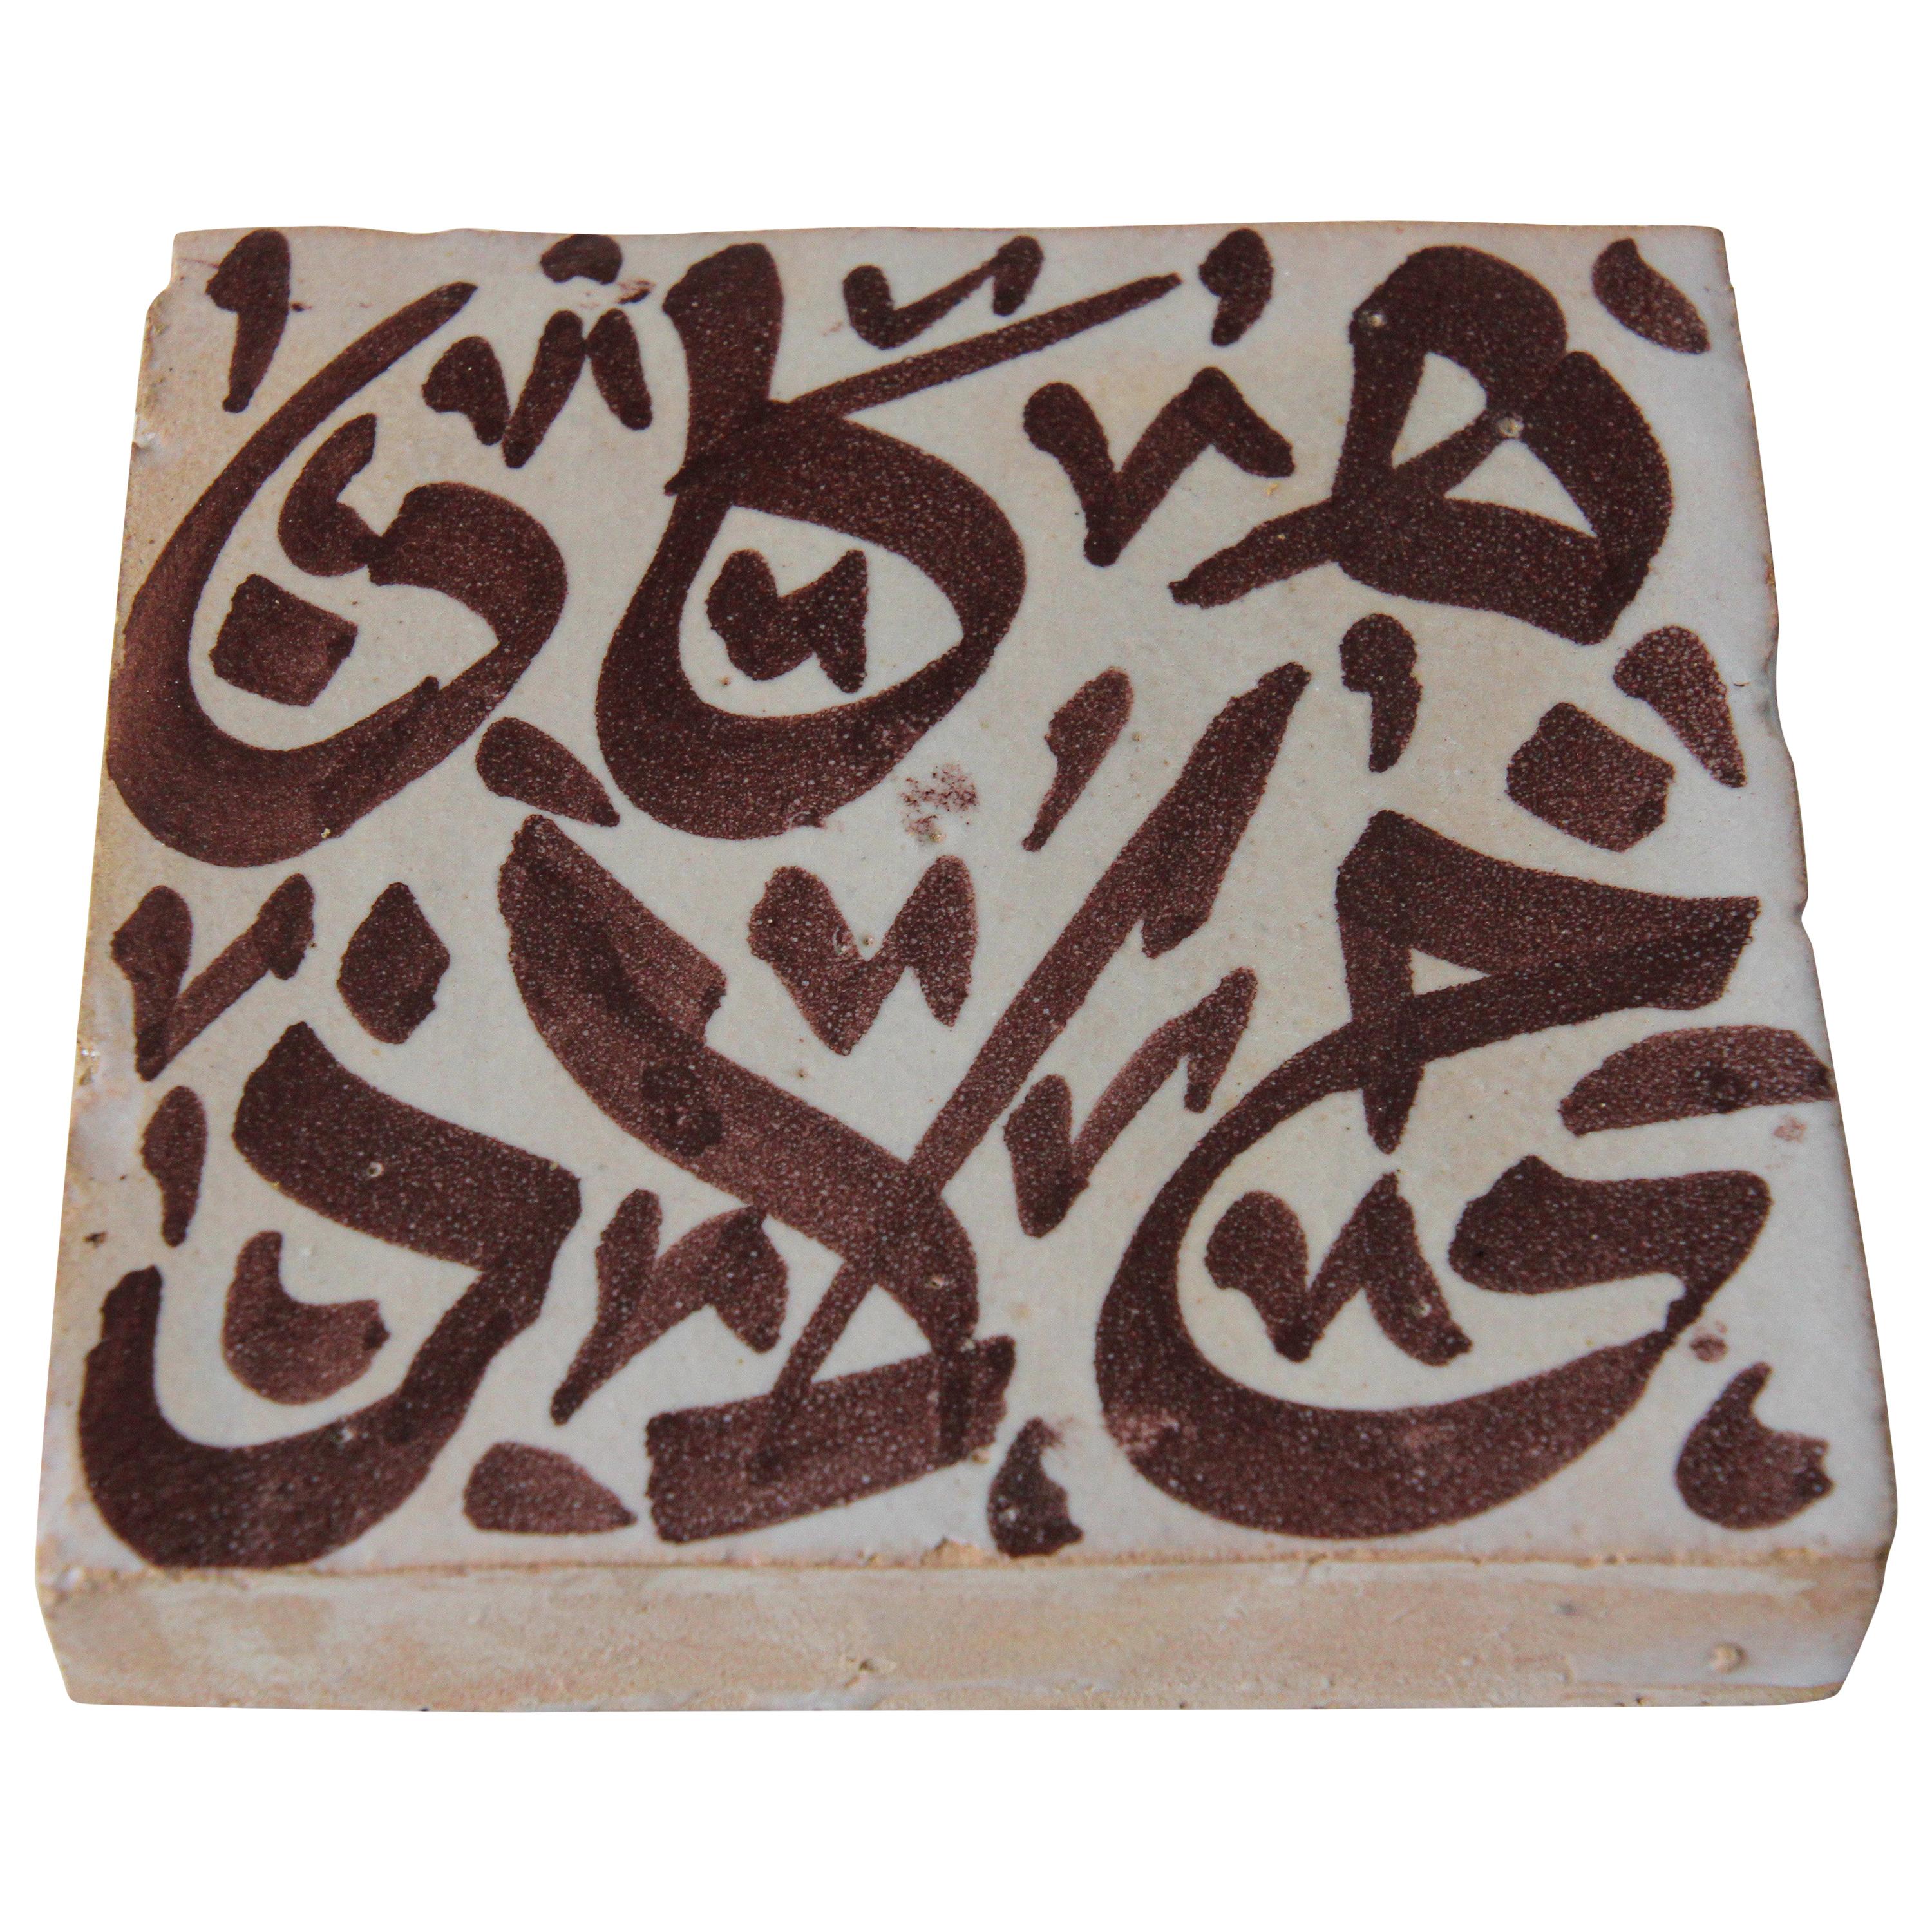 Moorish Tile with Arabic Brown Writing For Sale